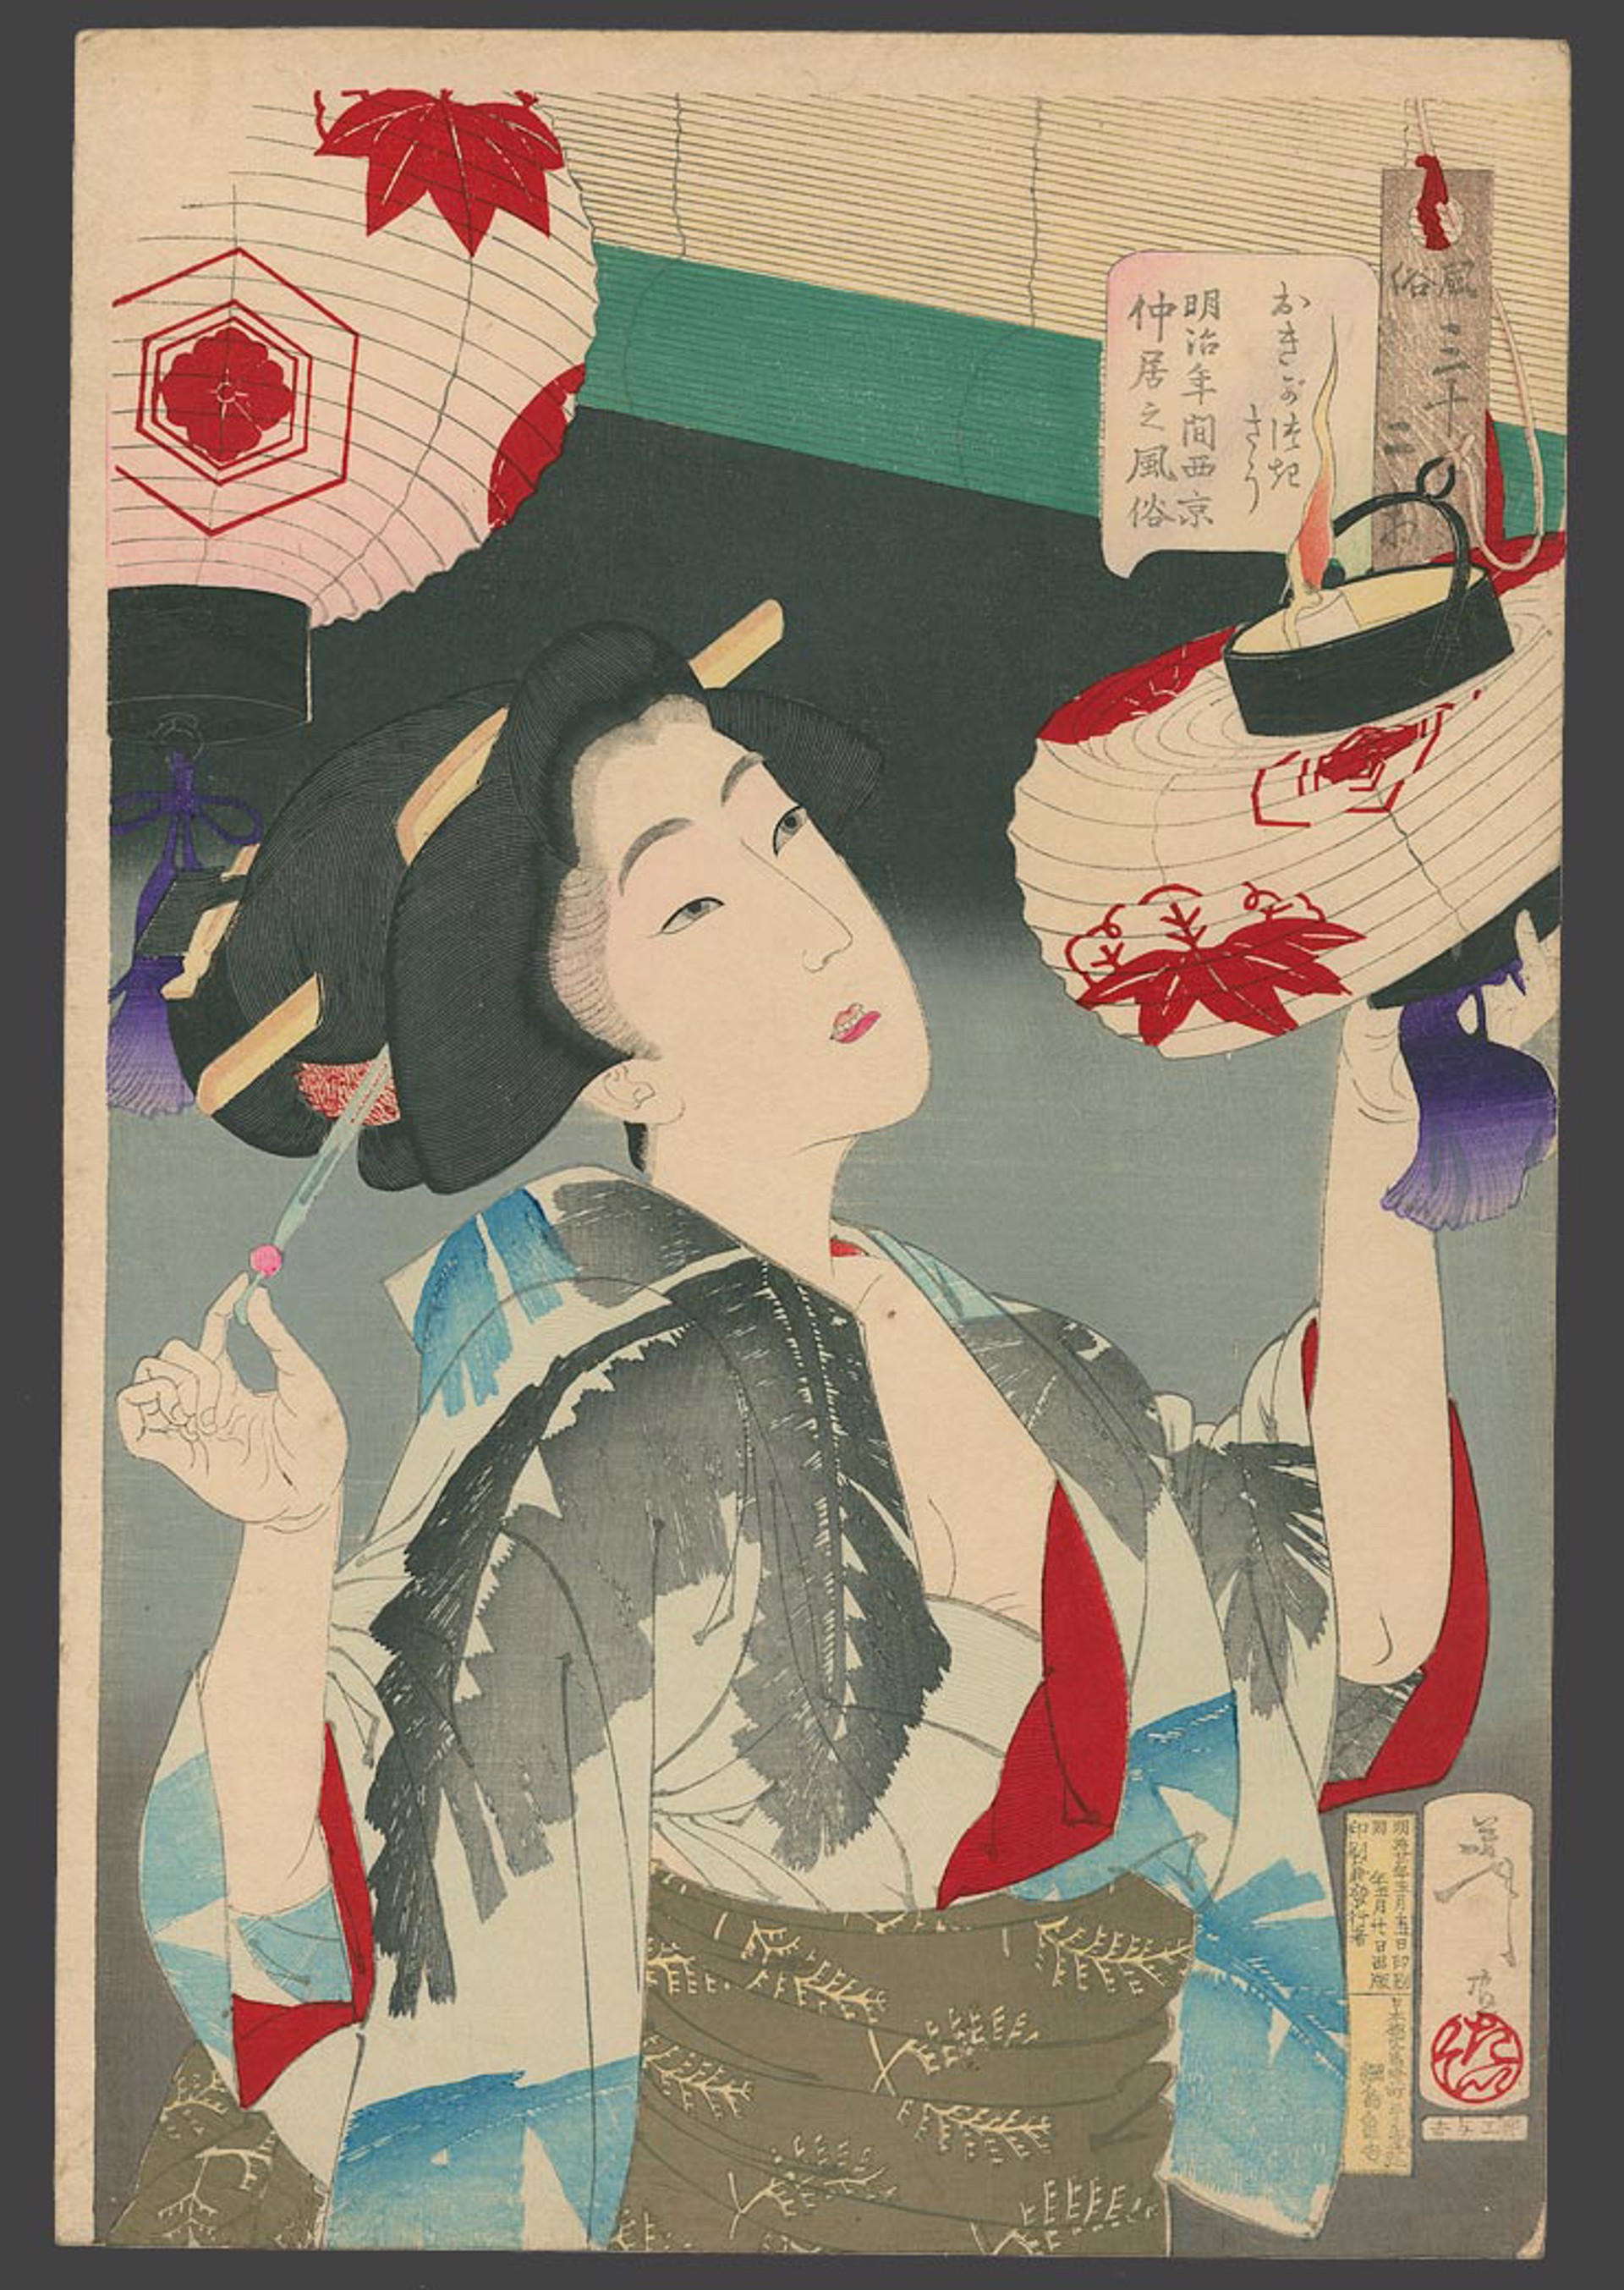 Looking capable: Akyoto watress in the Meiji era (1867 - 1912) 32 Aspects of Women by Yoshitoshi